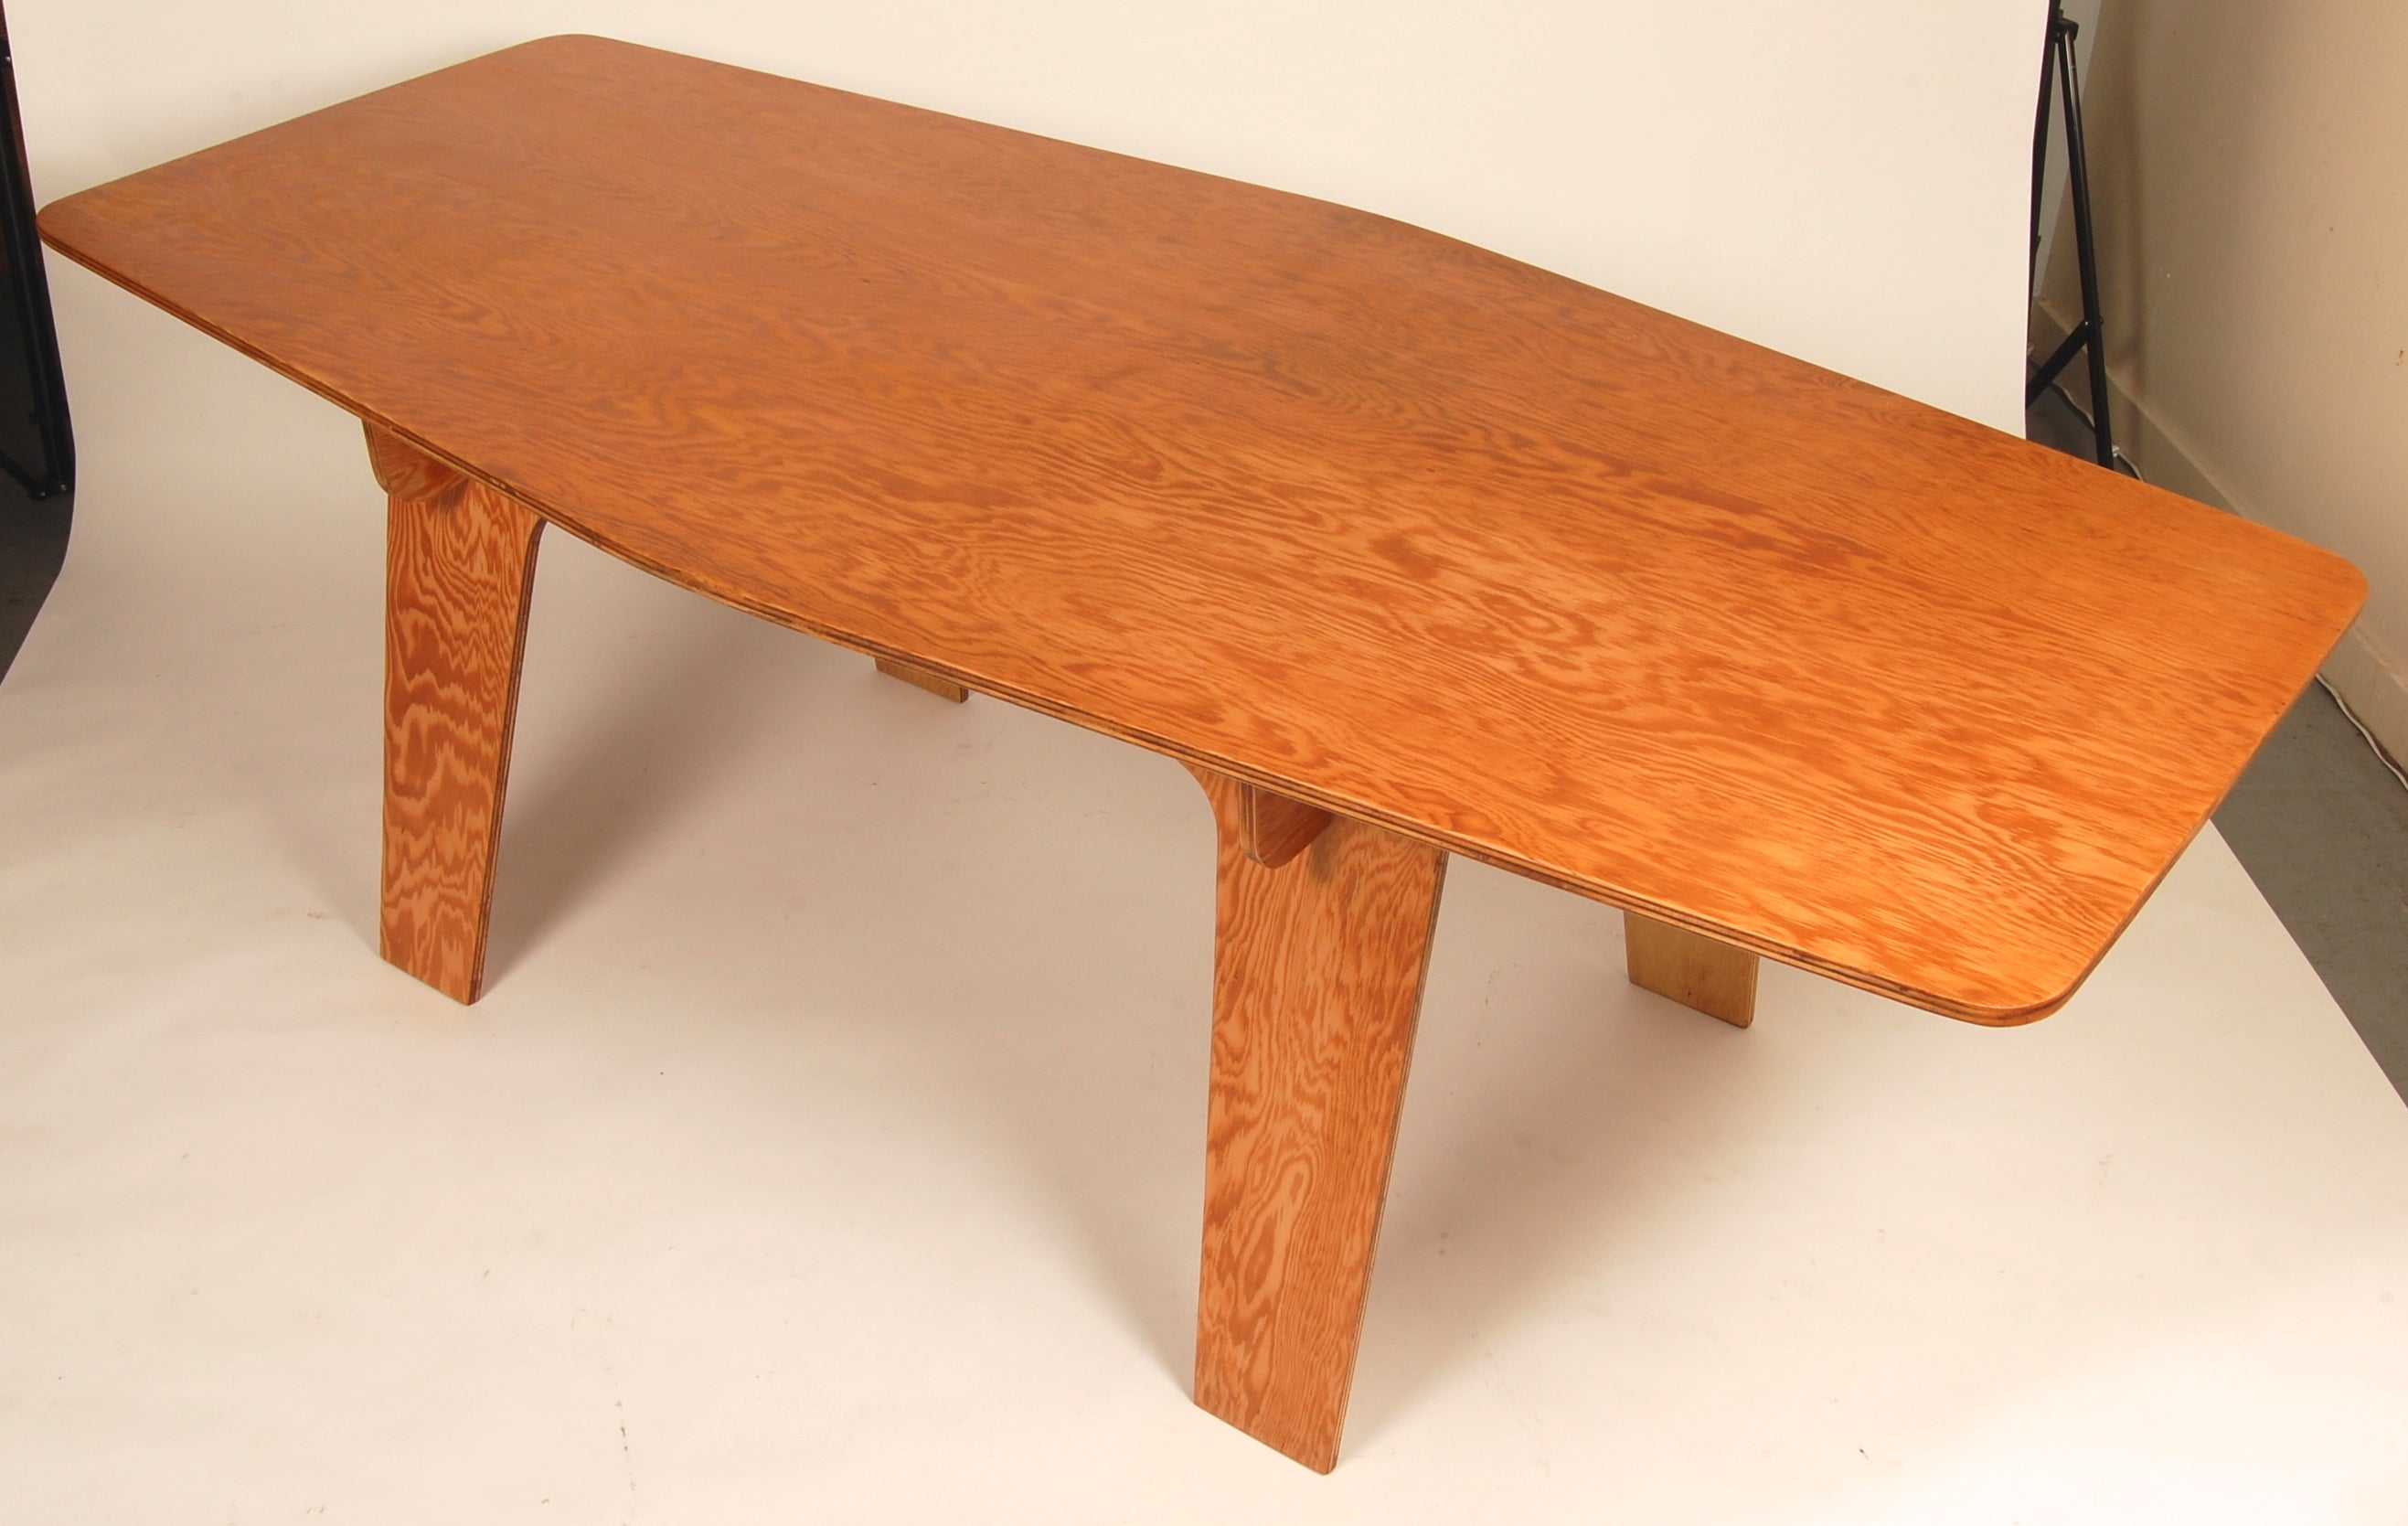 Constructivist Plywood Table